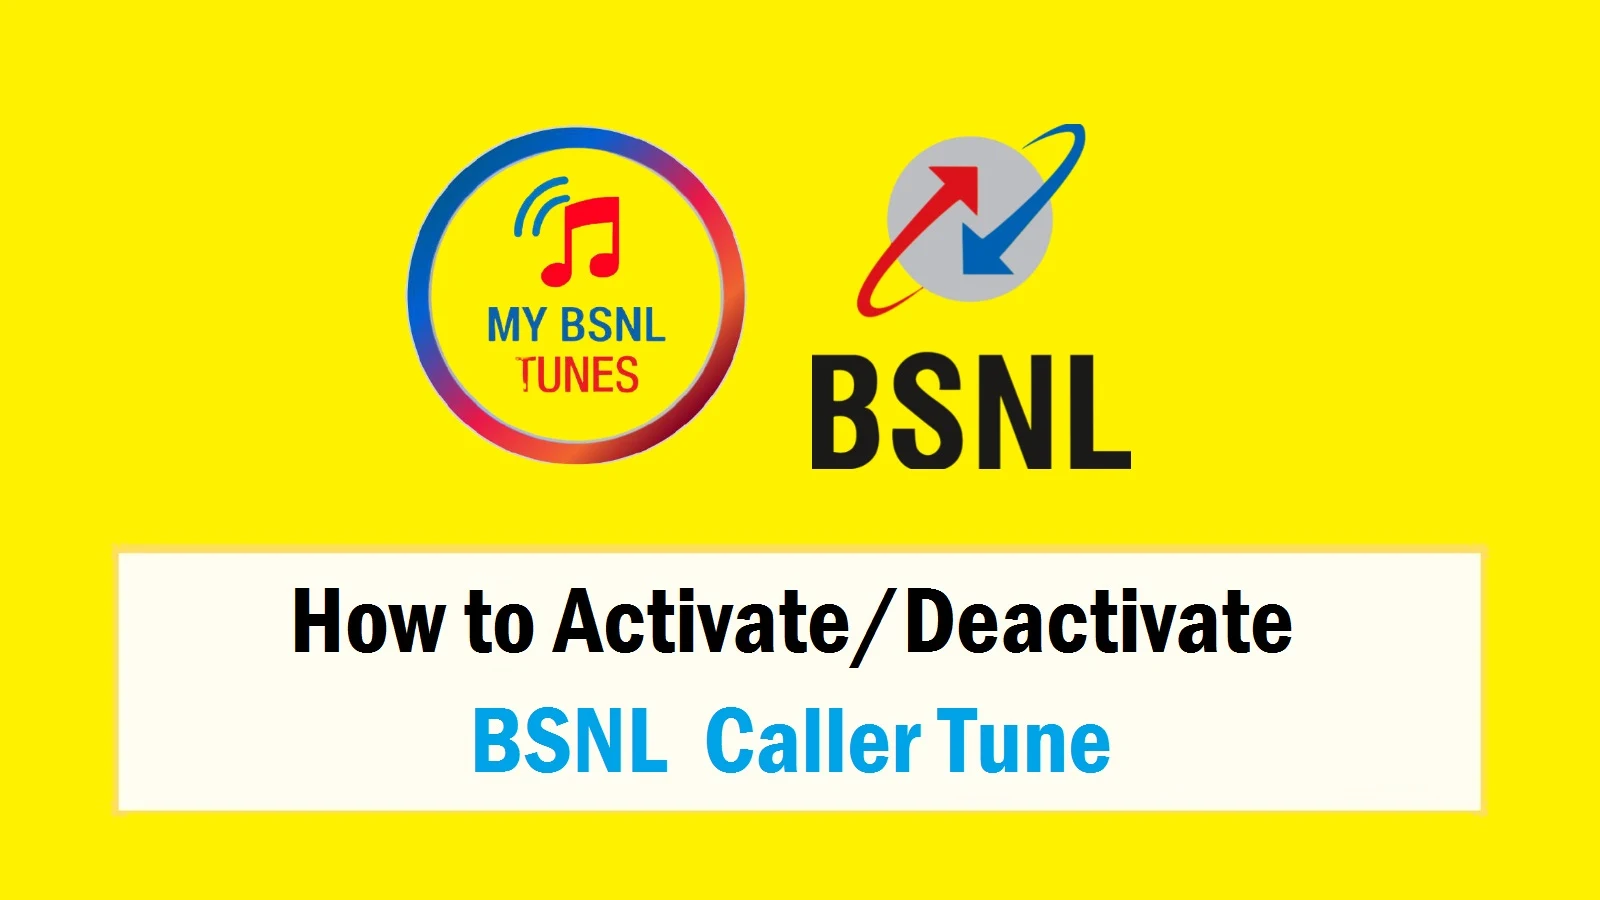 How to Activate/Deactivate BSNL Caller Tune